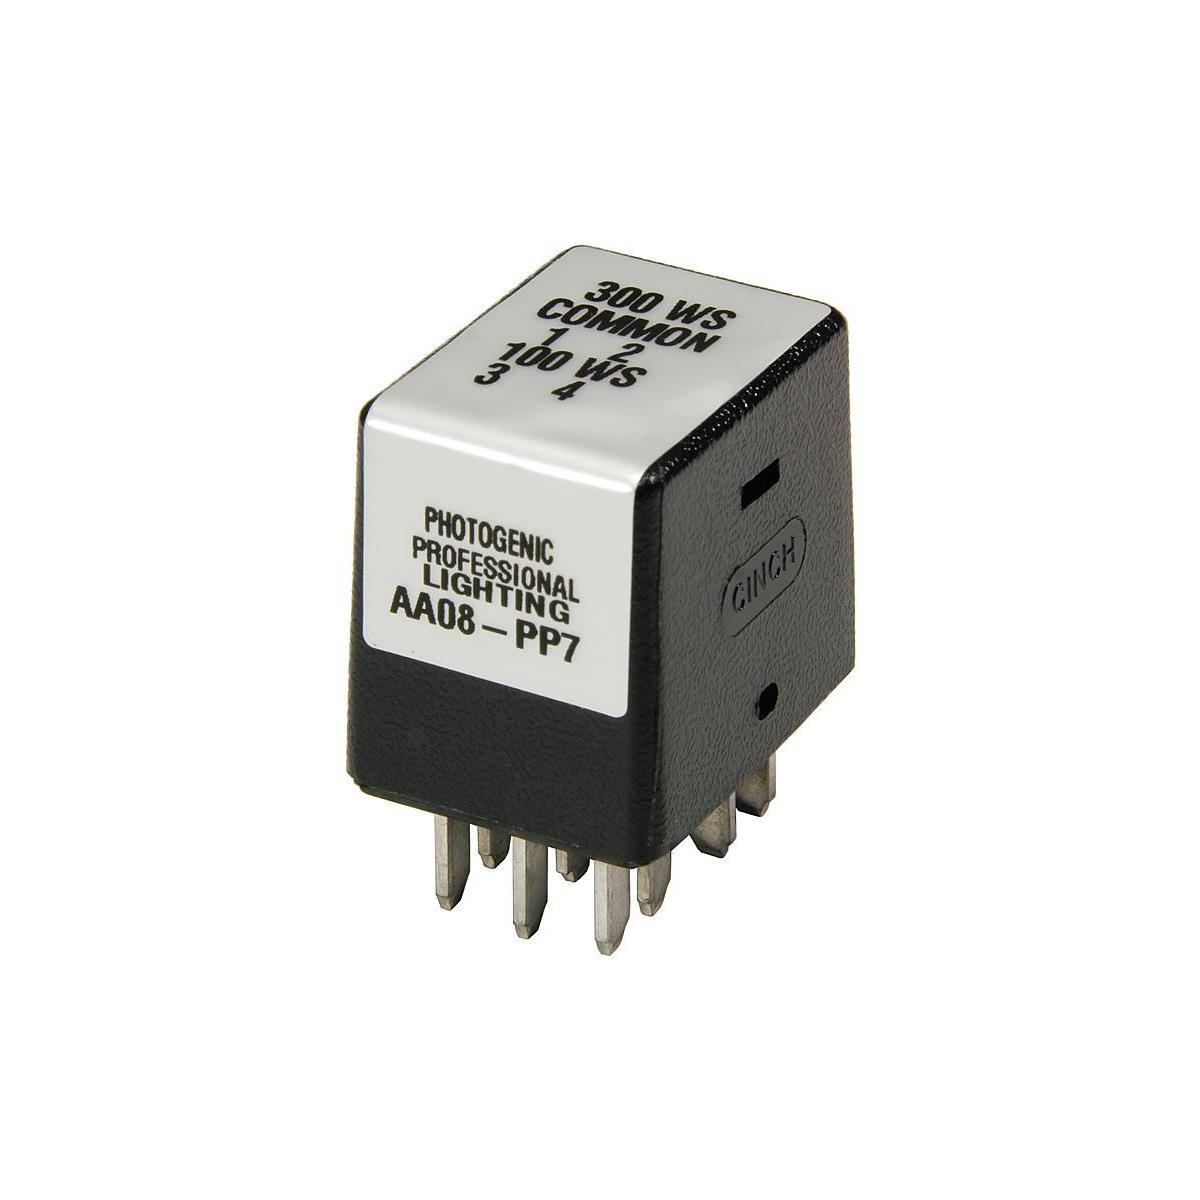 Image of Photogenic AA08-PP7 Power Ratio Plug for AA08 FlashMaster Power Supply